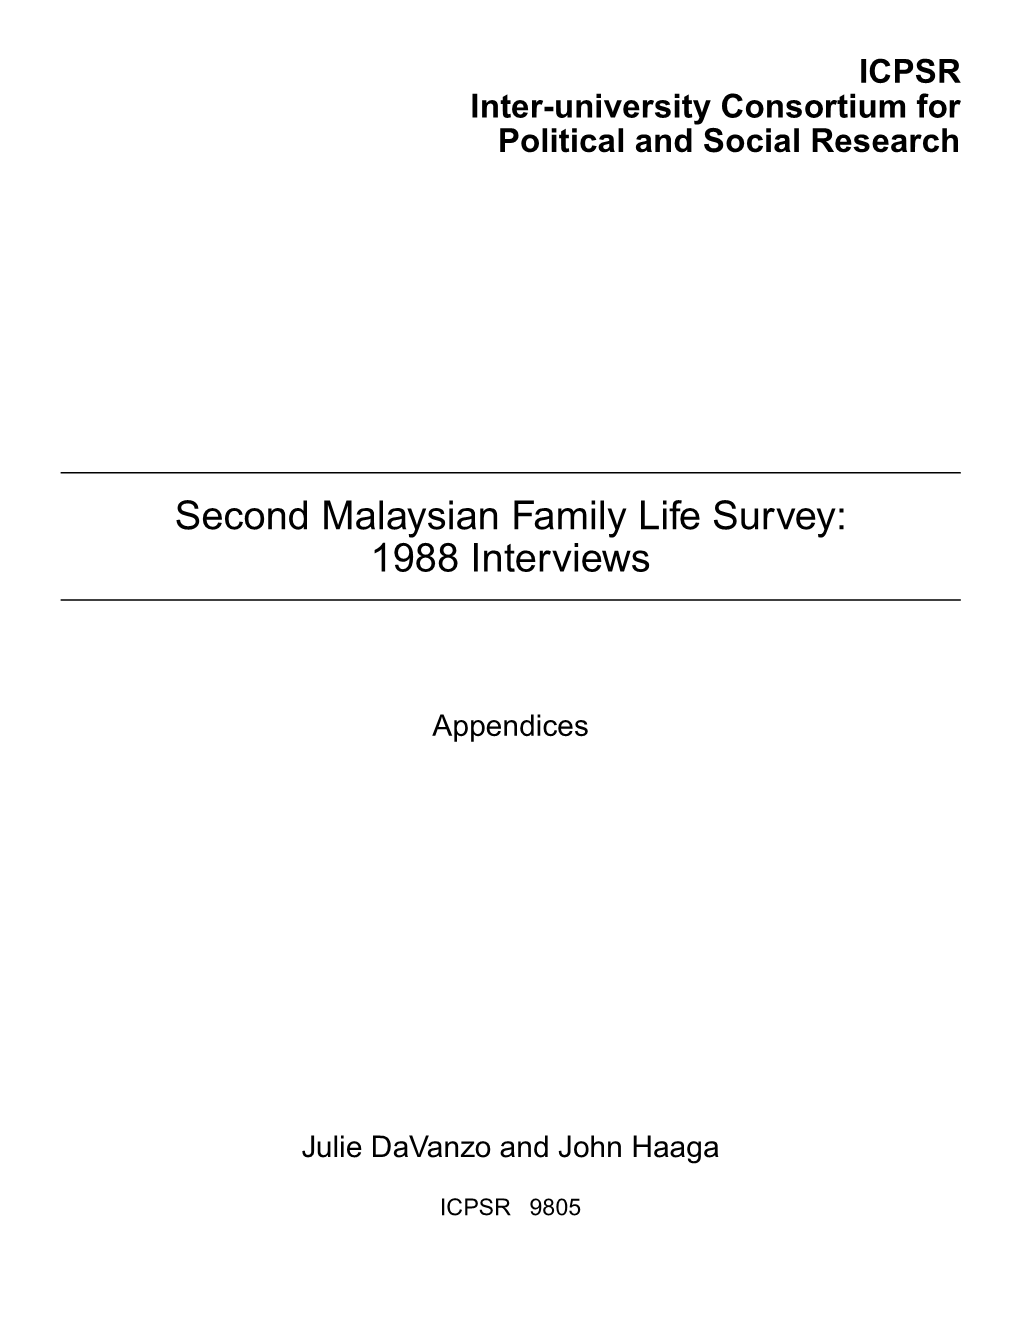 Second Malaysian Family Life Survey: 1988 Interviews